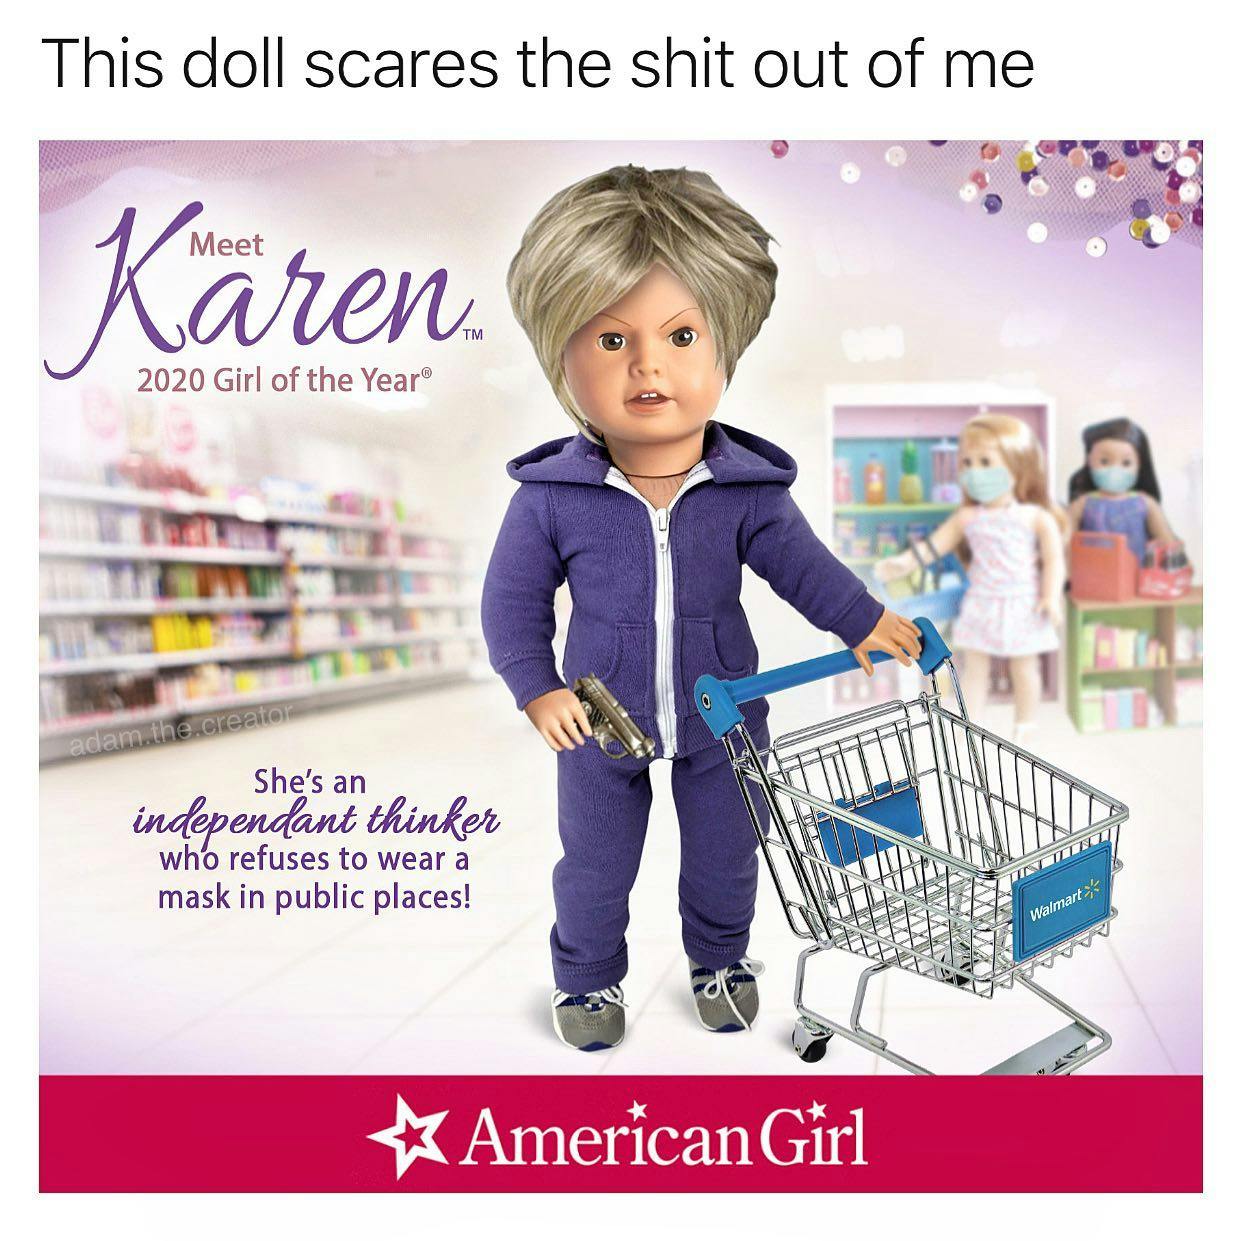 Meet Karen 2020 Girl of the Year